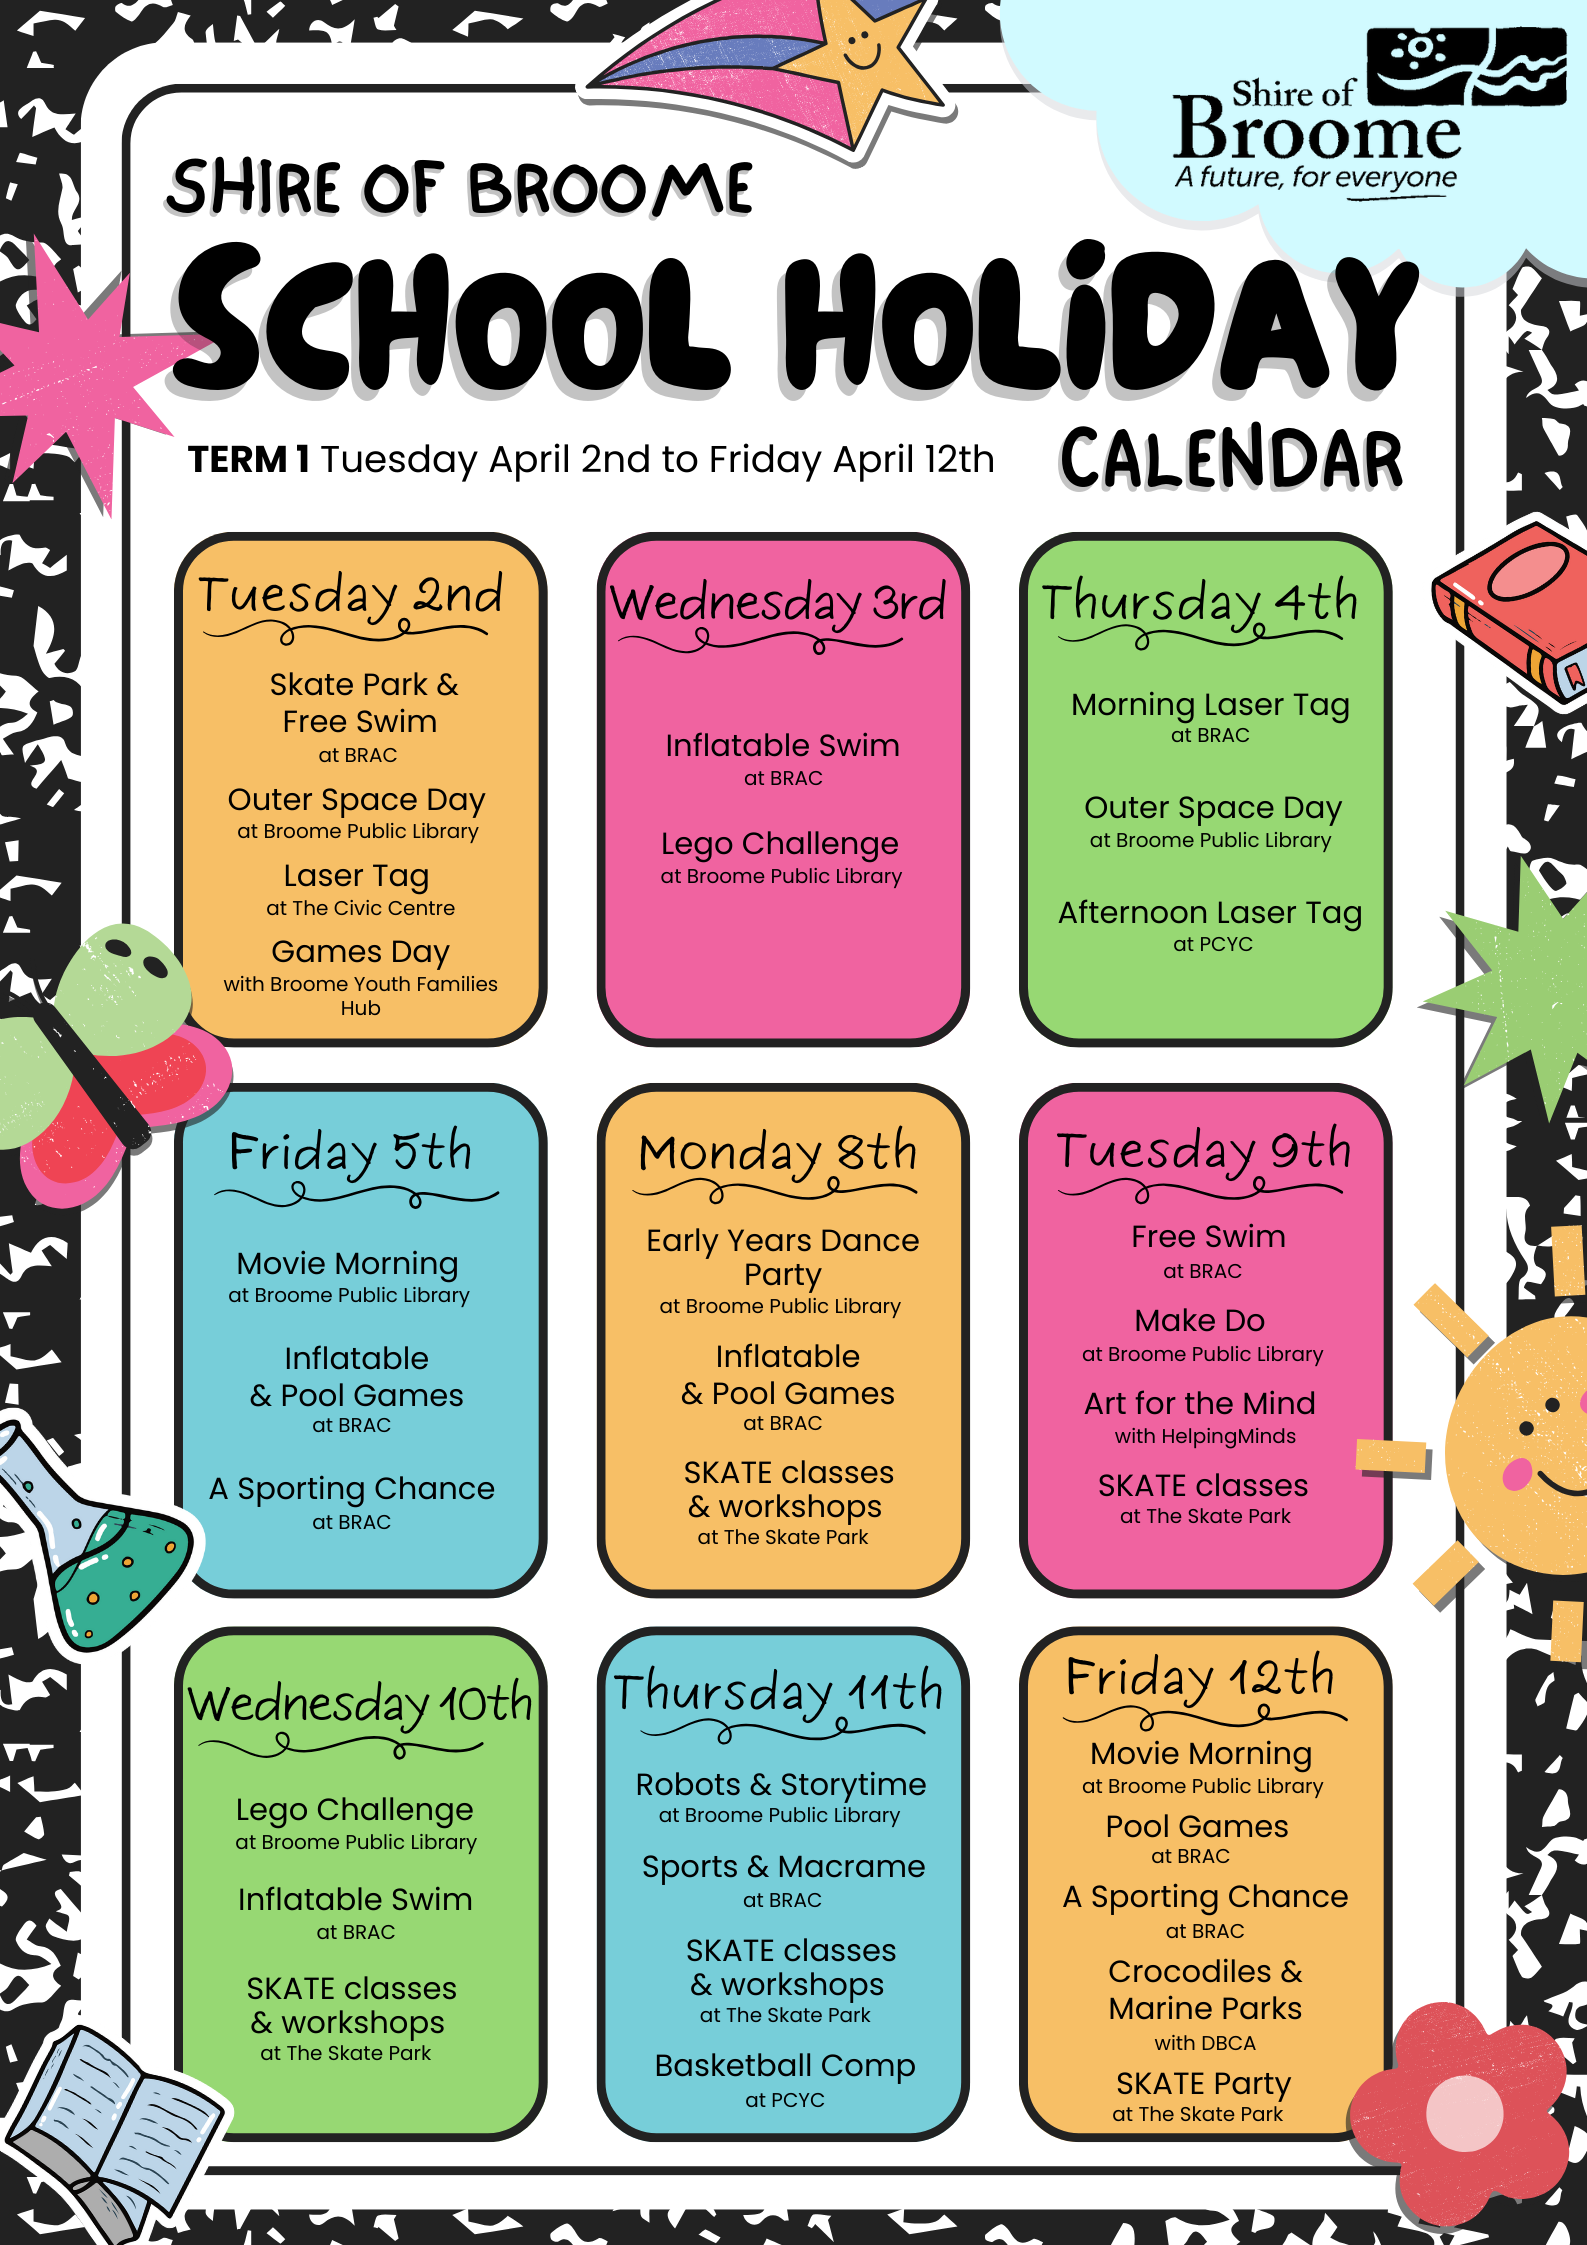 School Holiday Calendar 1.png